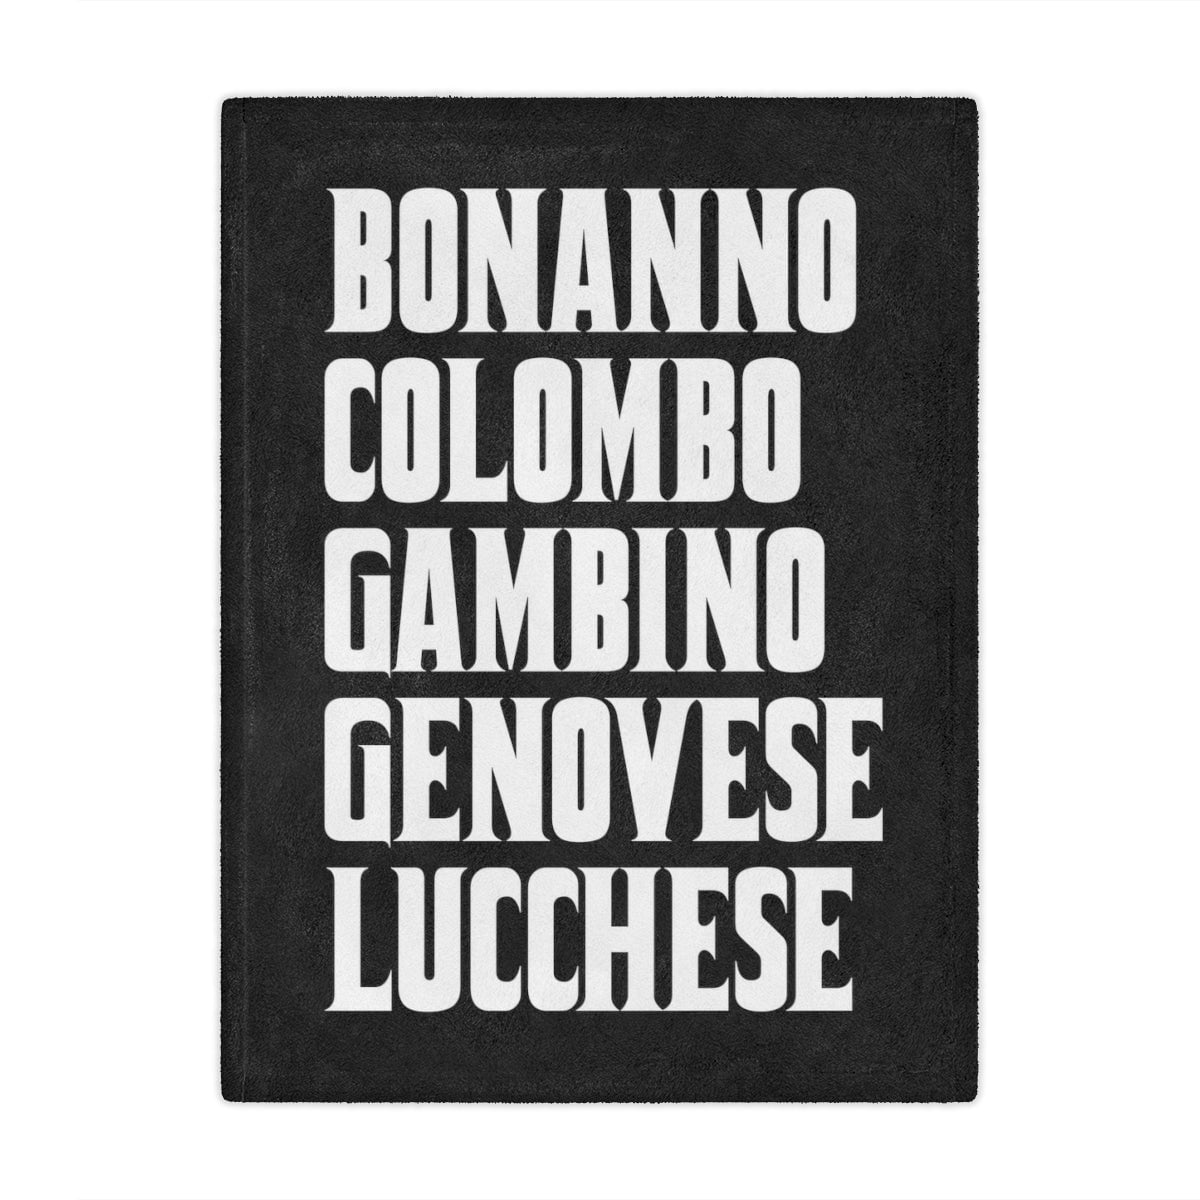 Bonanno Colombo Gambino Genovese Lucchese Five Families Minky Blanket - Luxurious Mafia Heritage